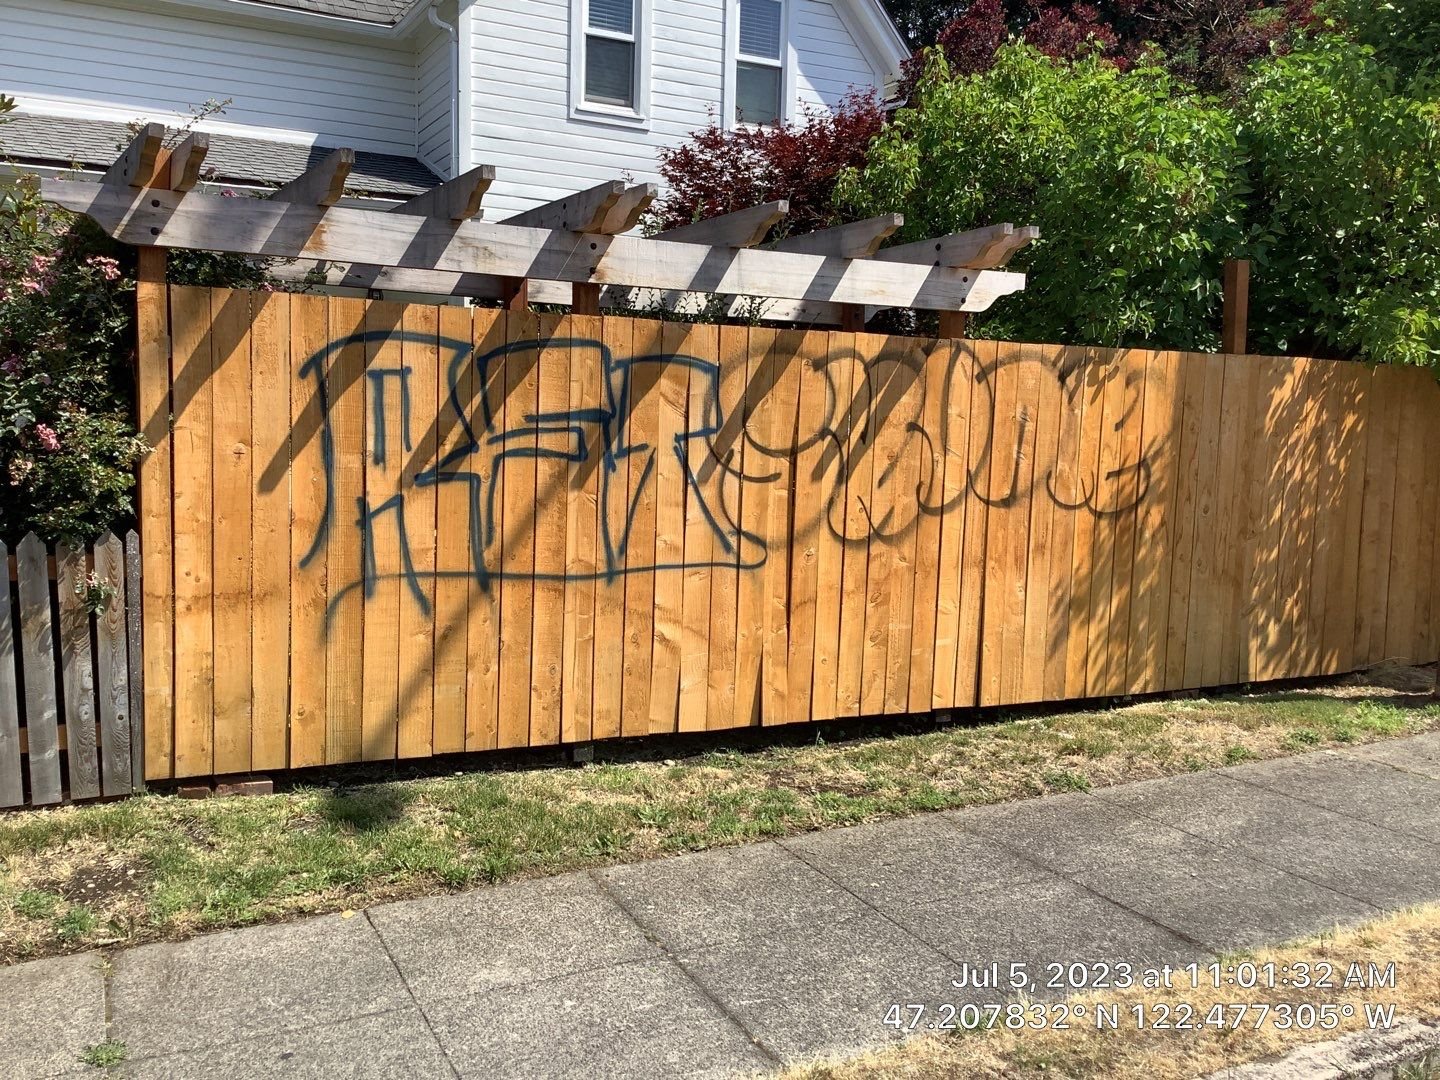 graffiti-removal-service-on-wood-fence-Tacoma.jpg